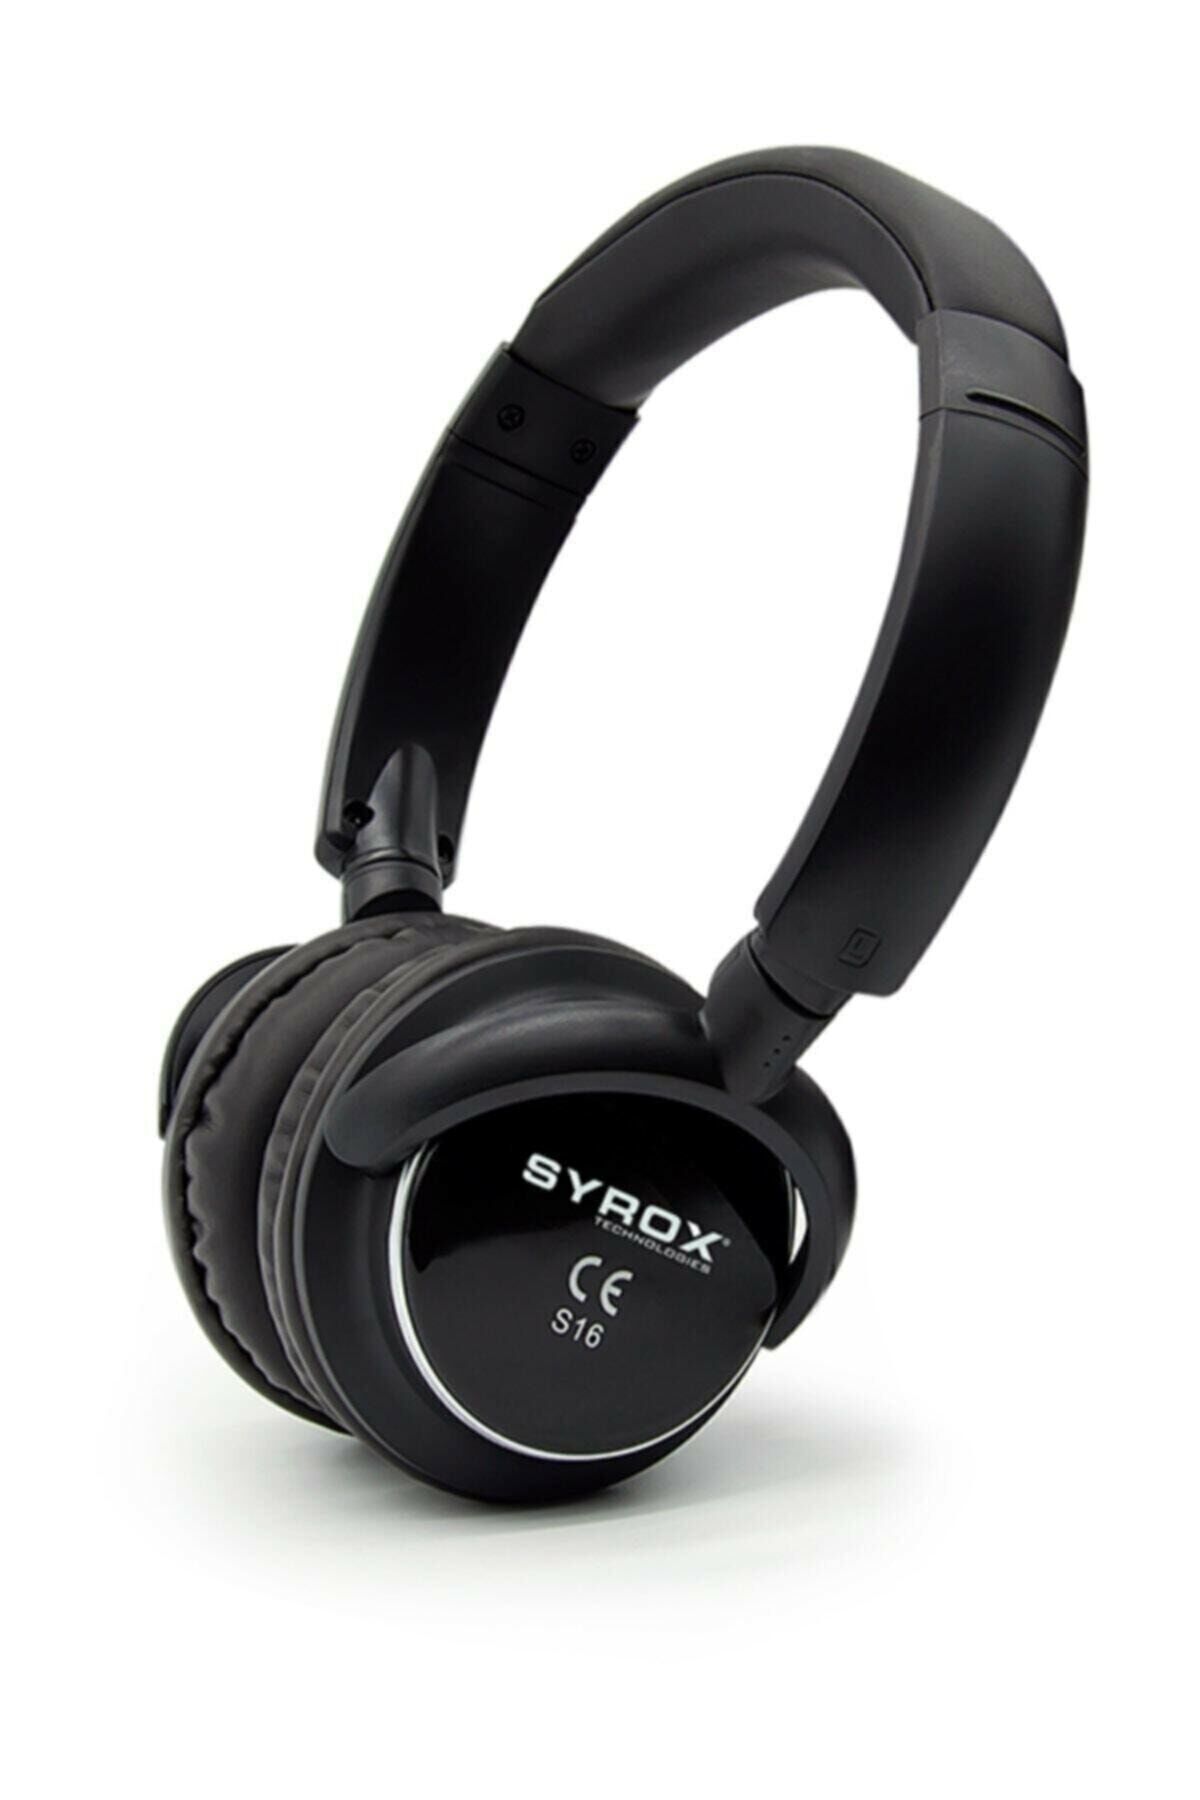 Siyah S16 16 Bluetooth 4 Fonksiyonlu Kulak Üstü Kulaklık S16